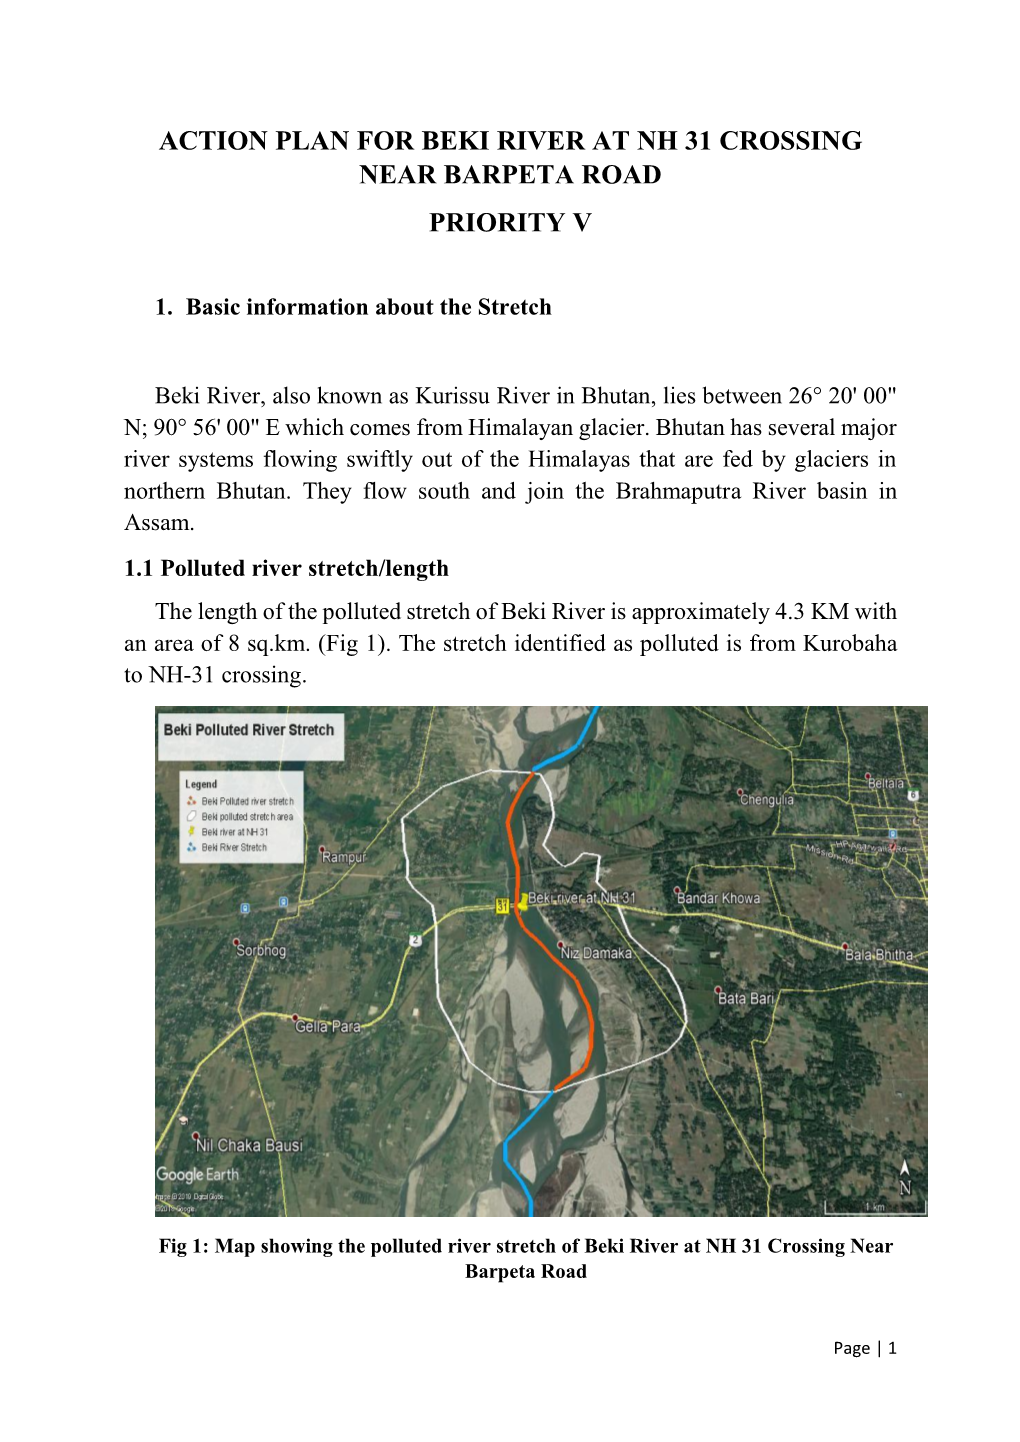 Action Plan for Beki River at Nh 31 Crossing Near Barpeta Road Priority V